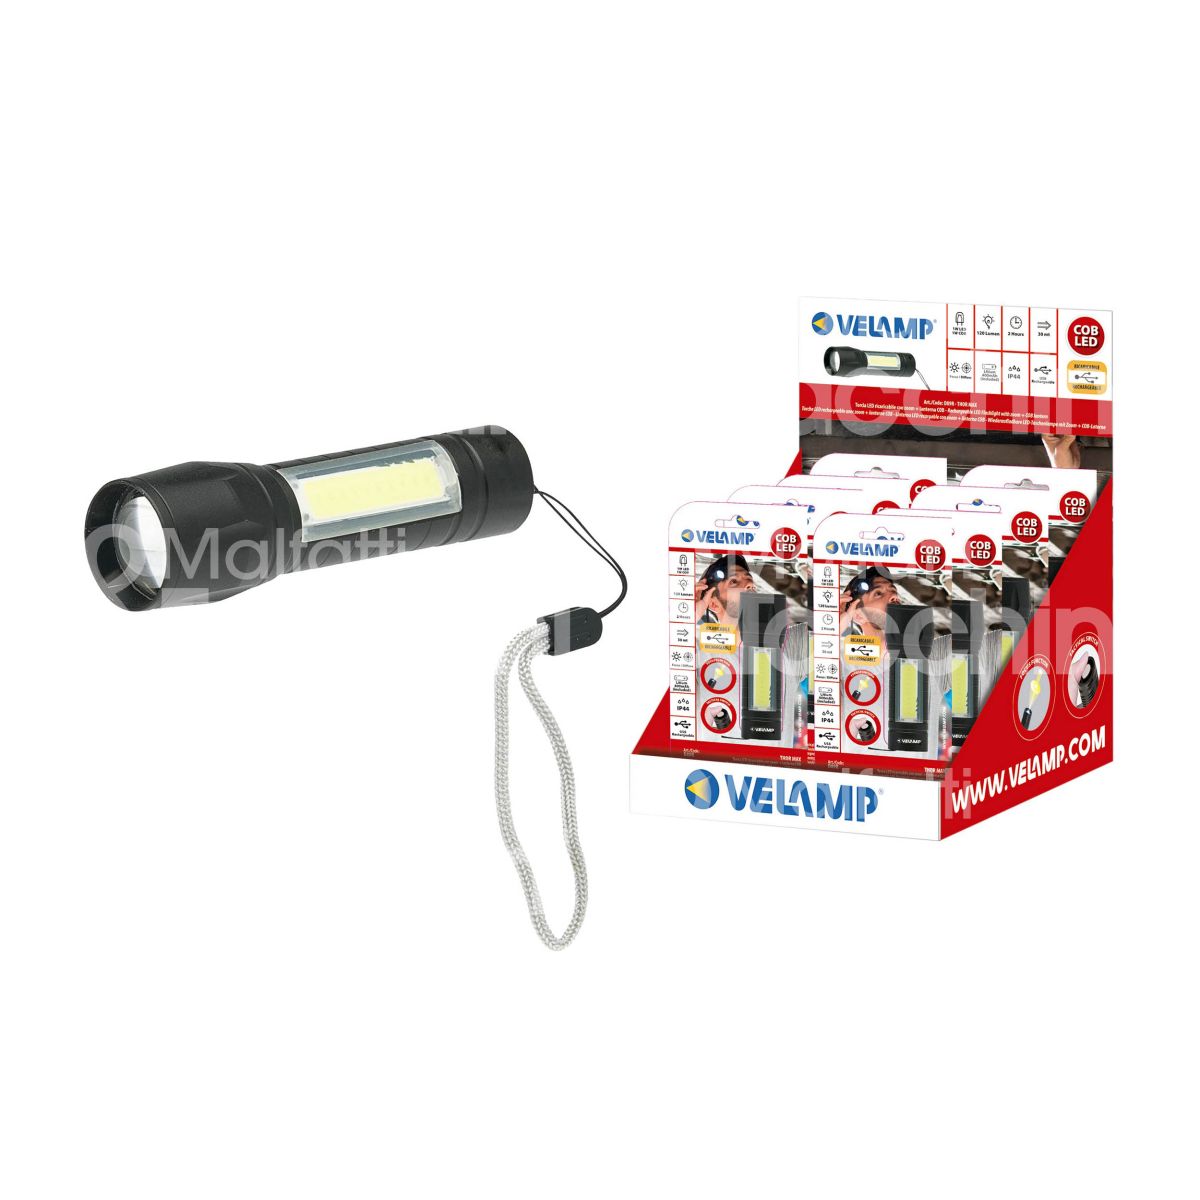 Velamp d89r torcia thor max led alimentazione batteria - lumen 120